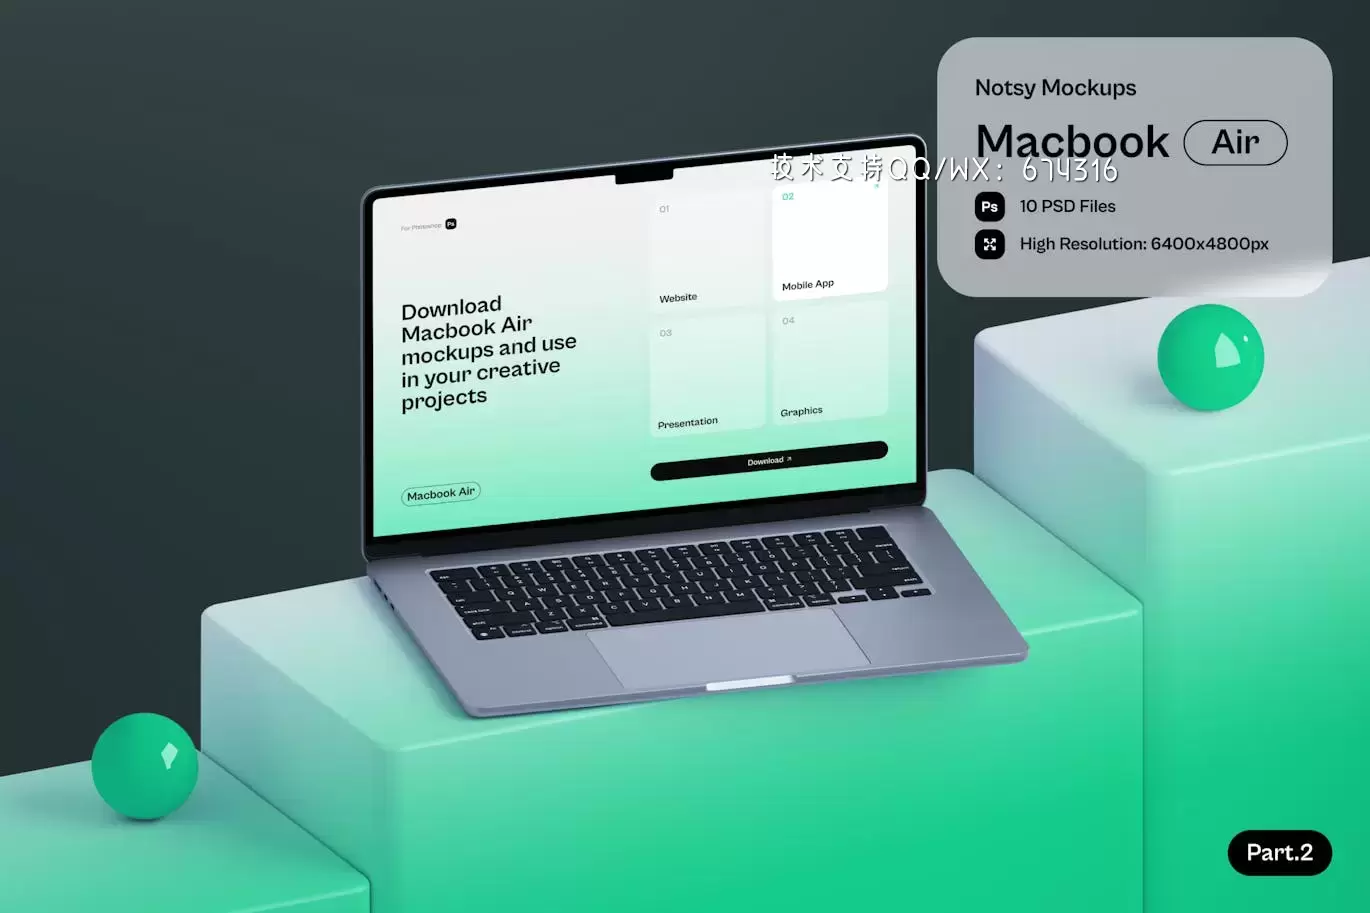 Macbook Air 模型样机第 2 部分 (PSD,PNG)免费下载